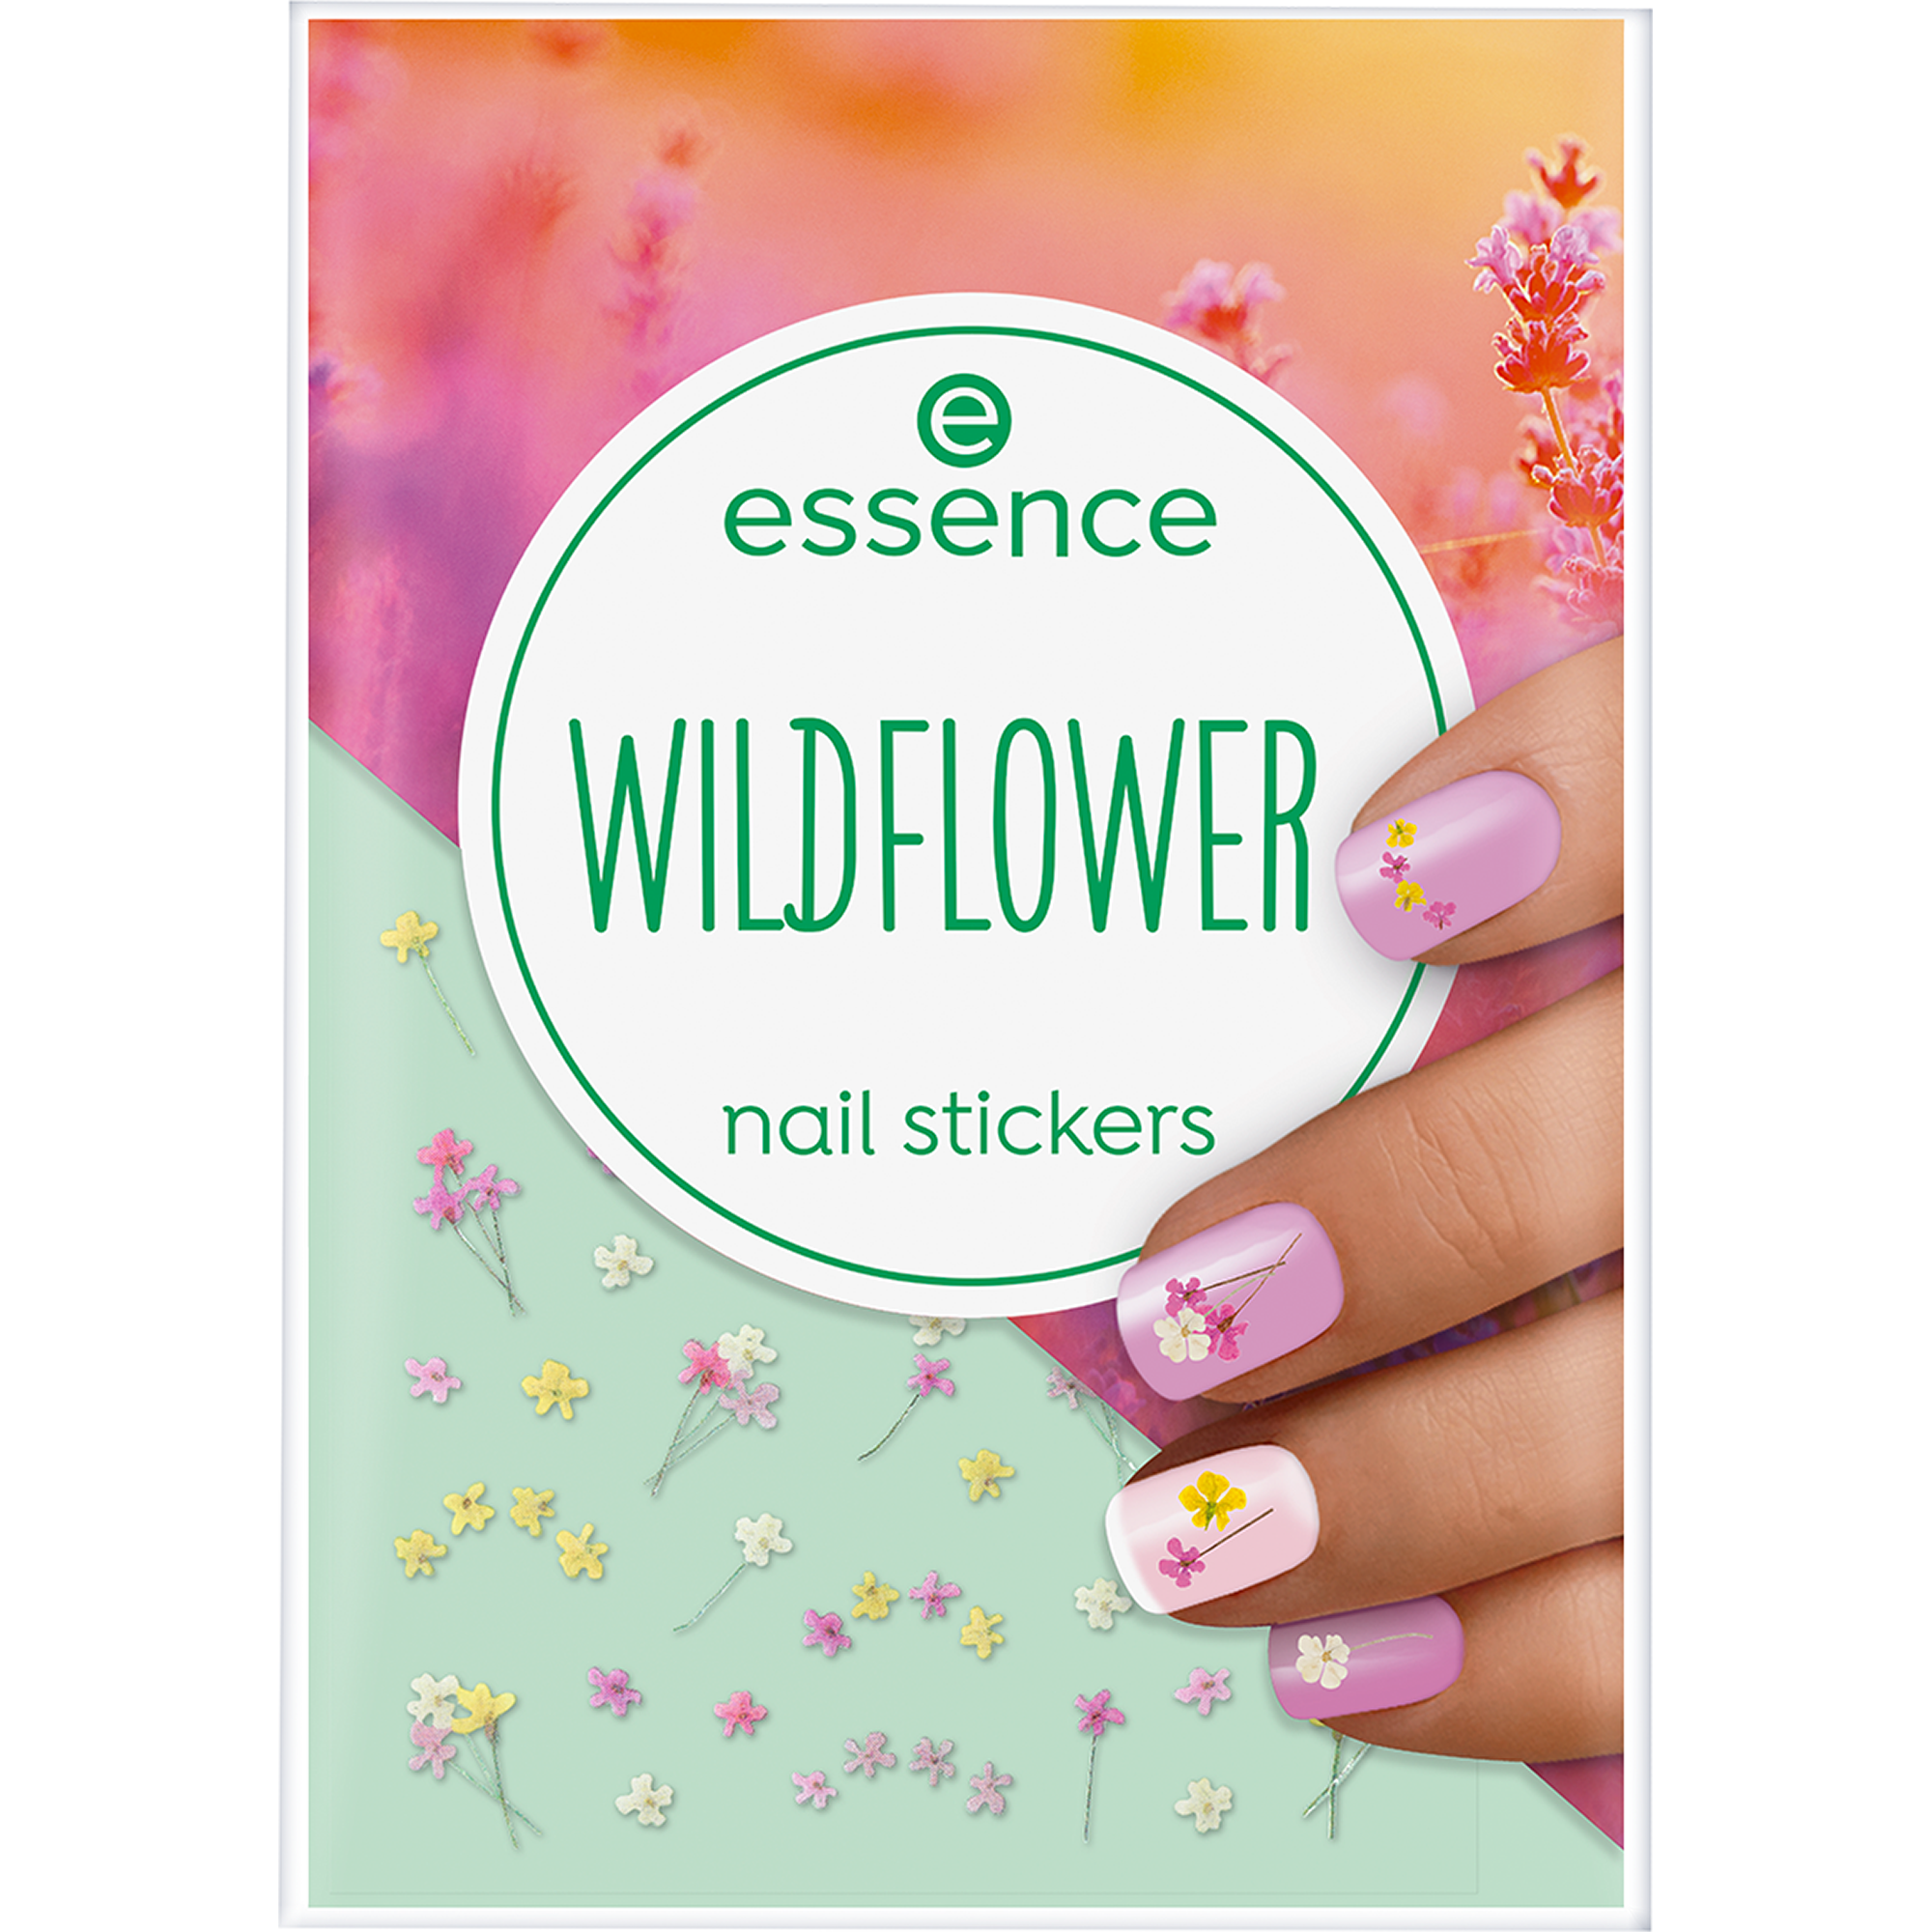 WILDFLOWER nail stickers